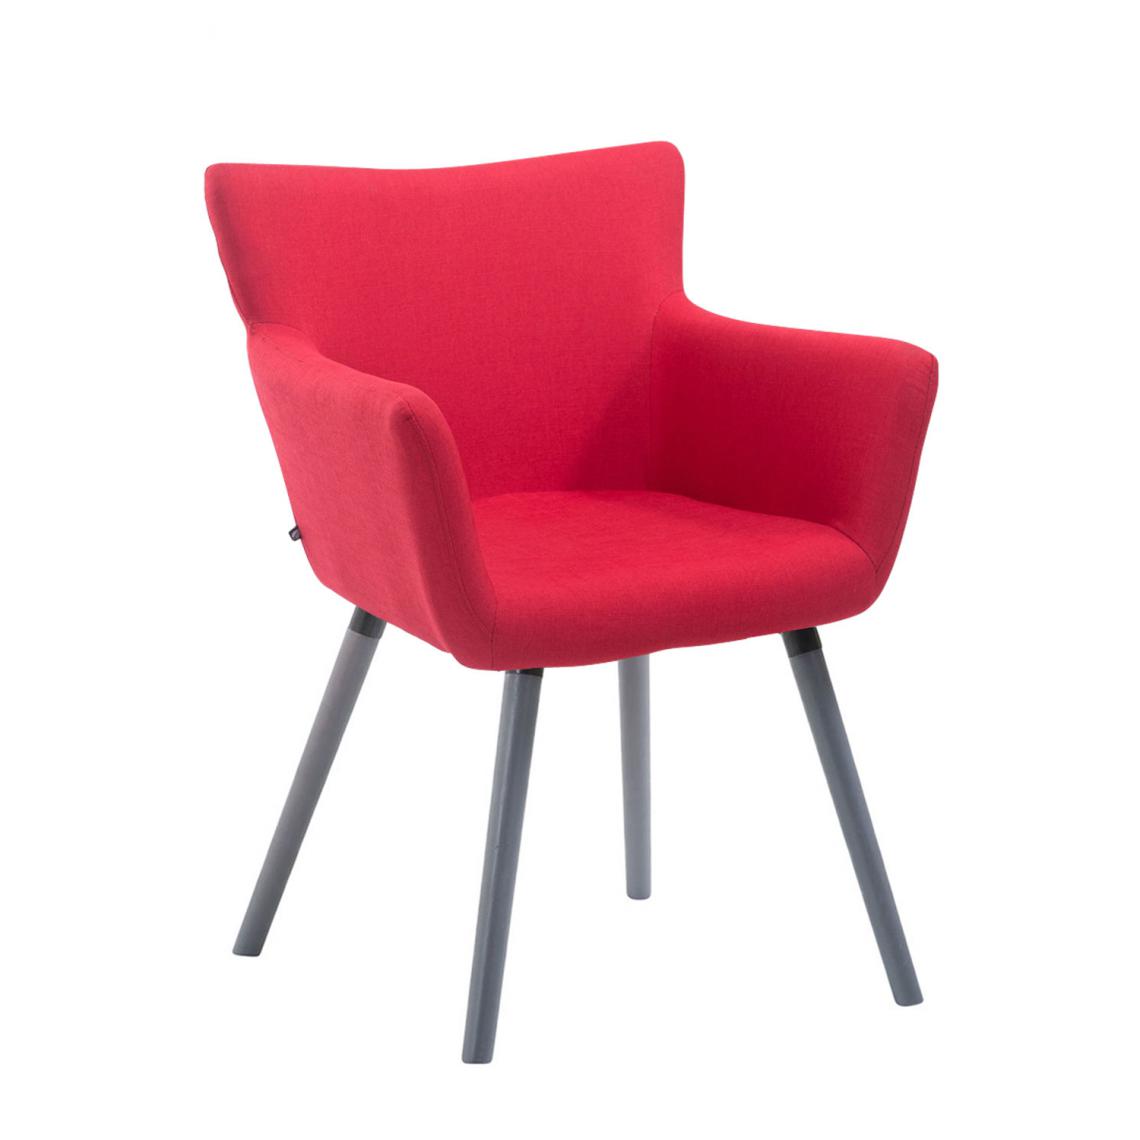 Icaverne - Superbe Chaise visiteur tissu selection Mascate gris couleur rouge - Chaises